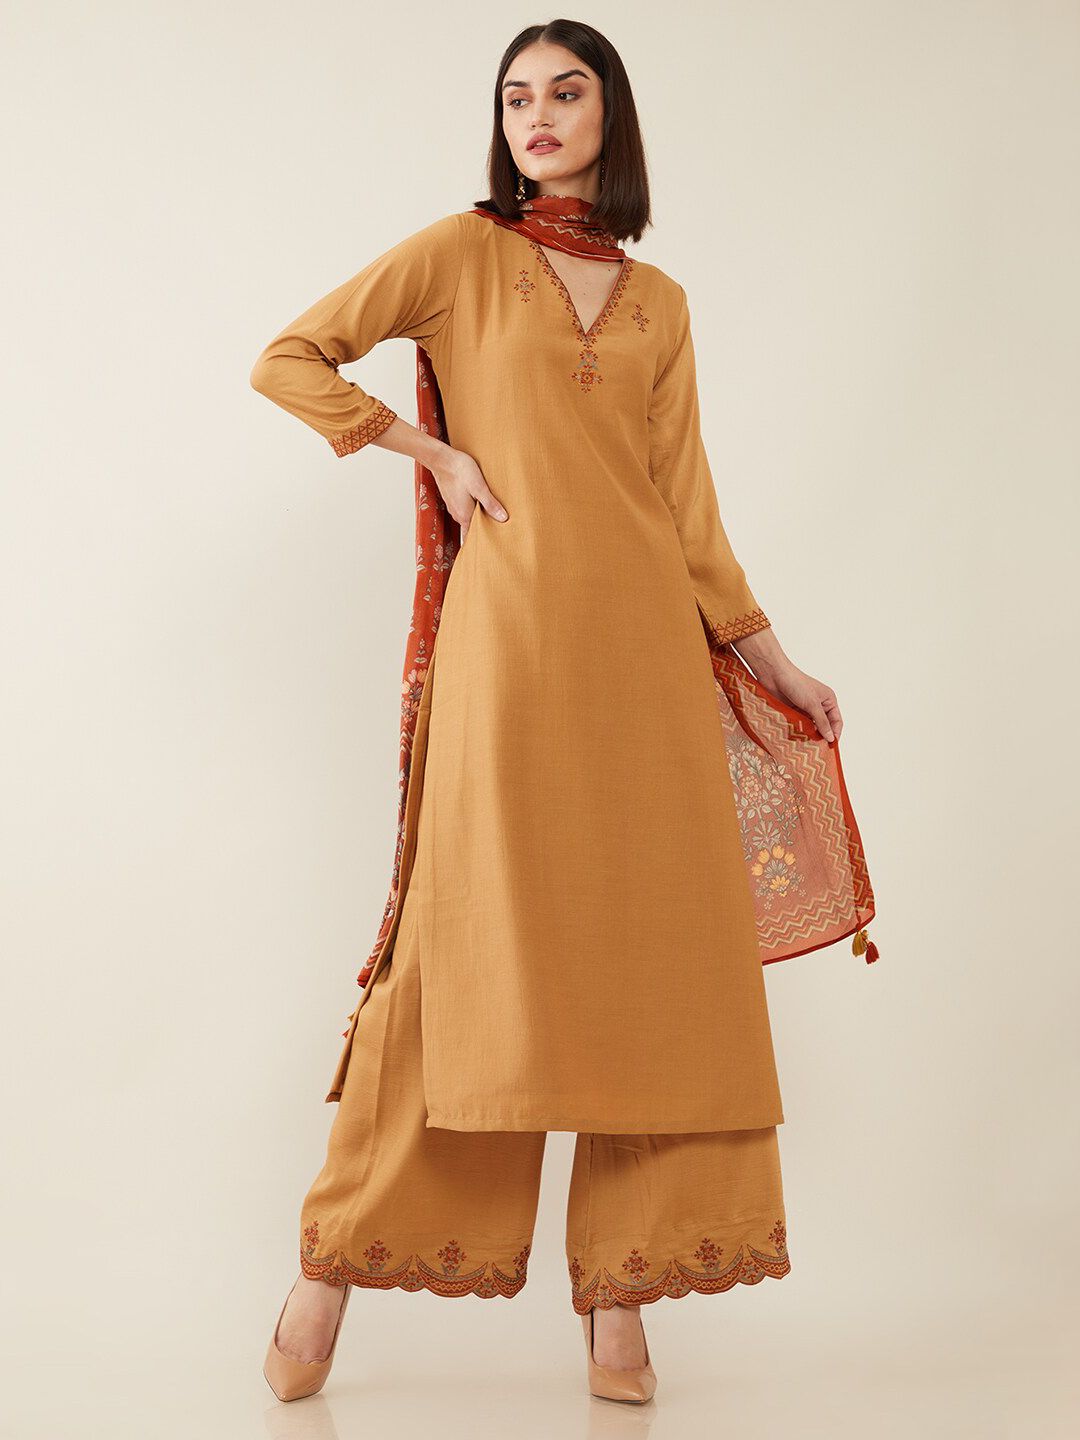 Soch Beige & Orange Embellished Unstitched Dress Material Price in India